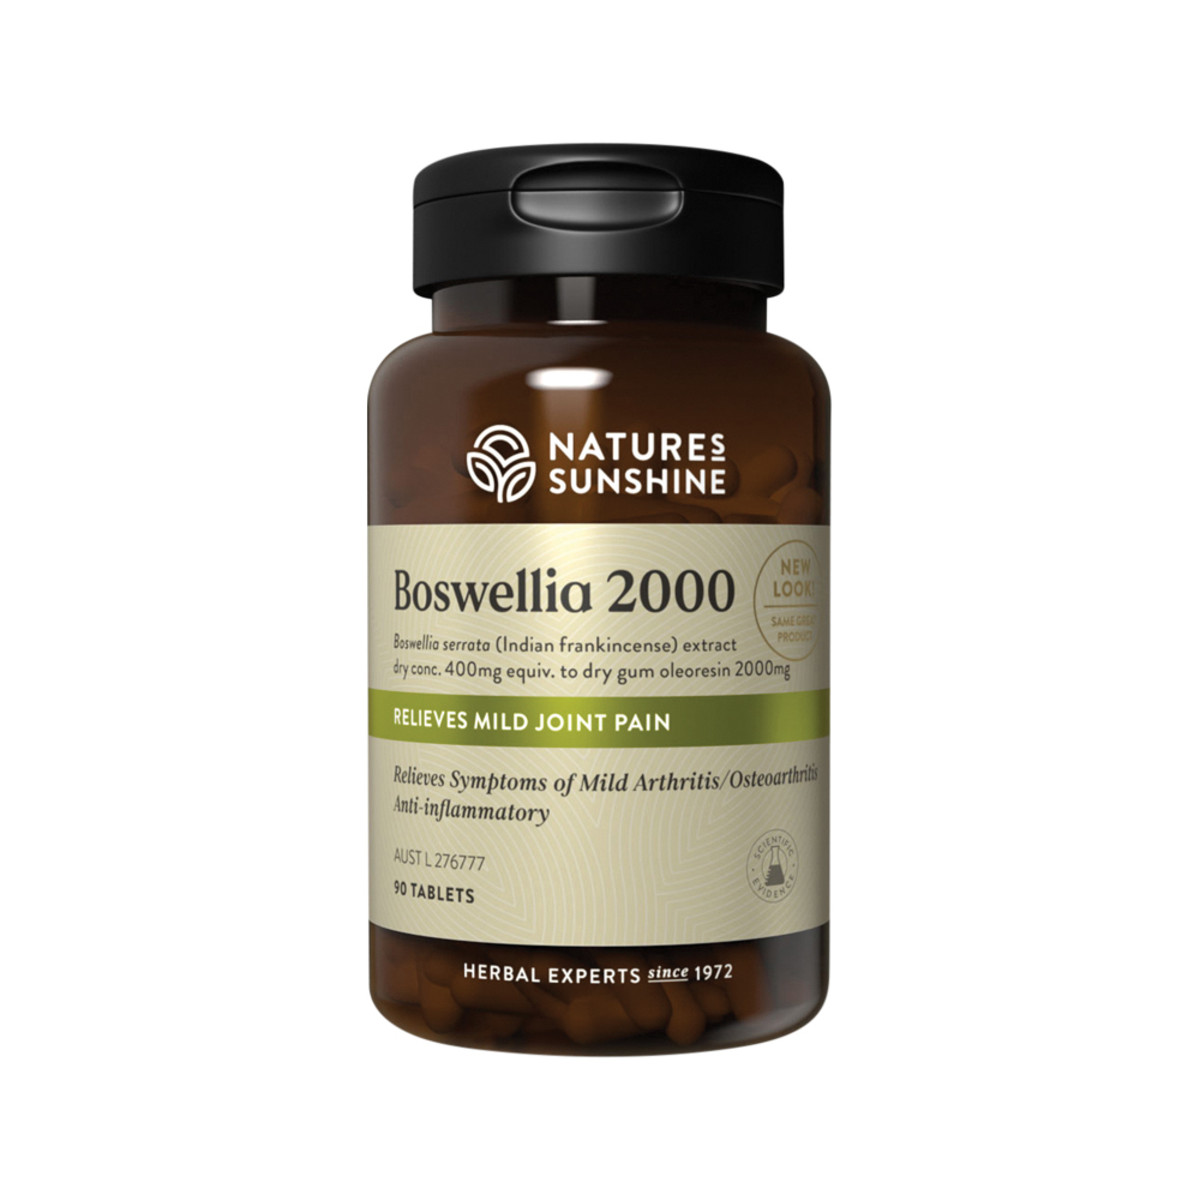 NATURES SUNSHINE - Boswellia 2000